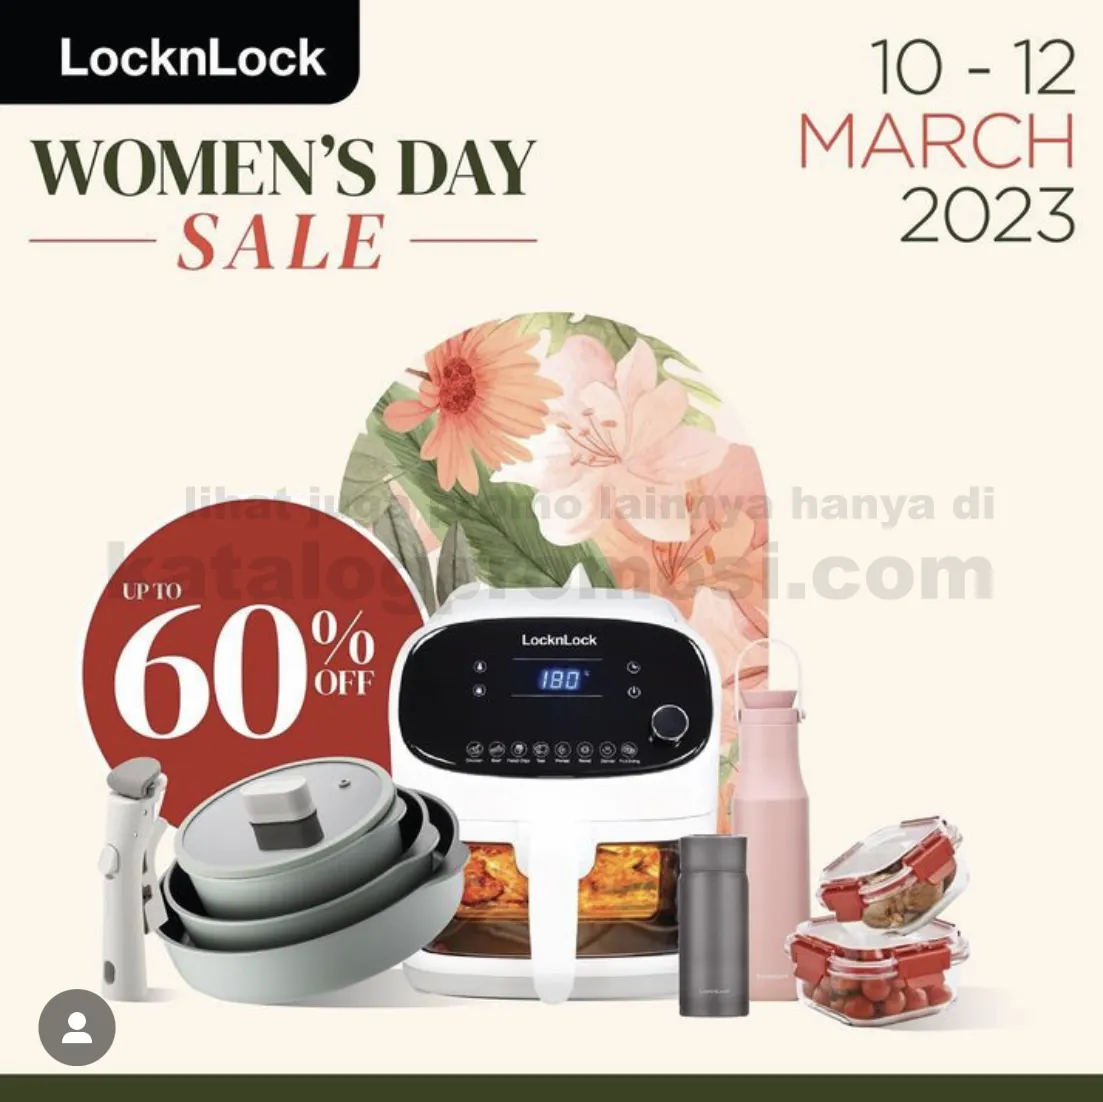 Promo LocknLock Women's Day Sale!! Diskon hingga 60%